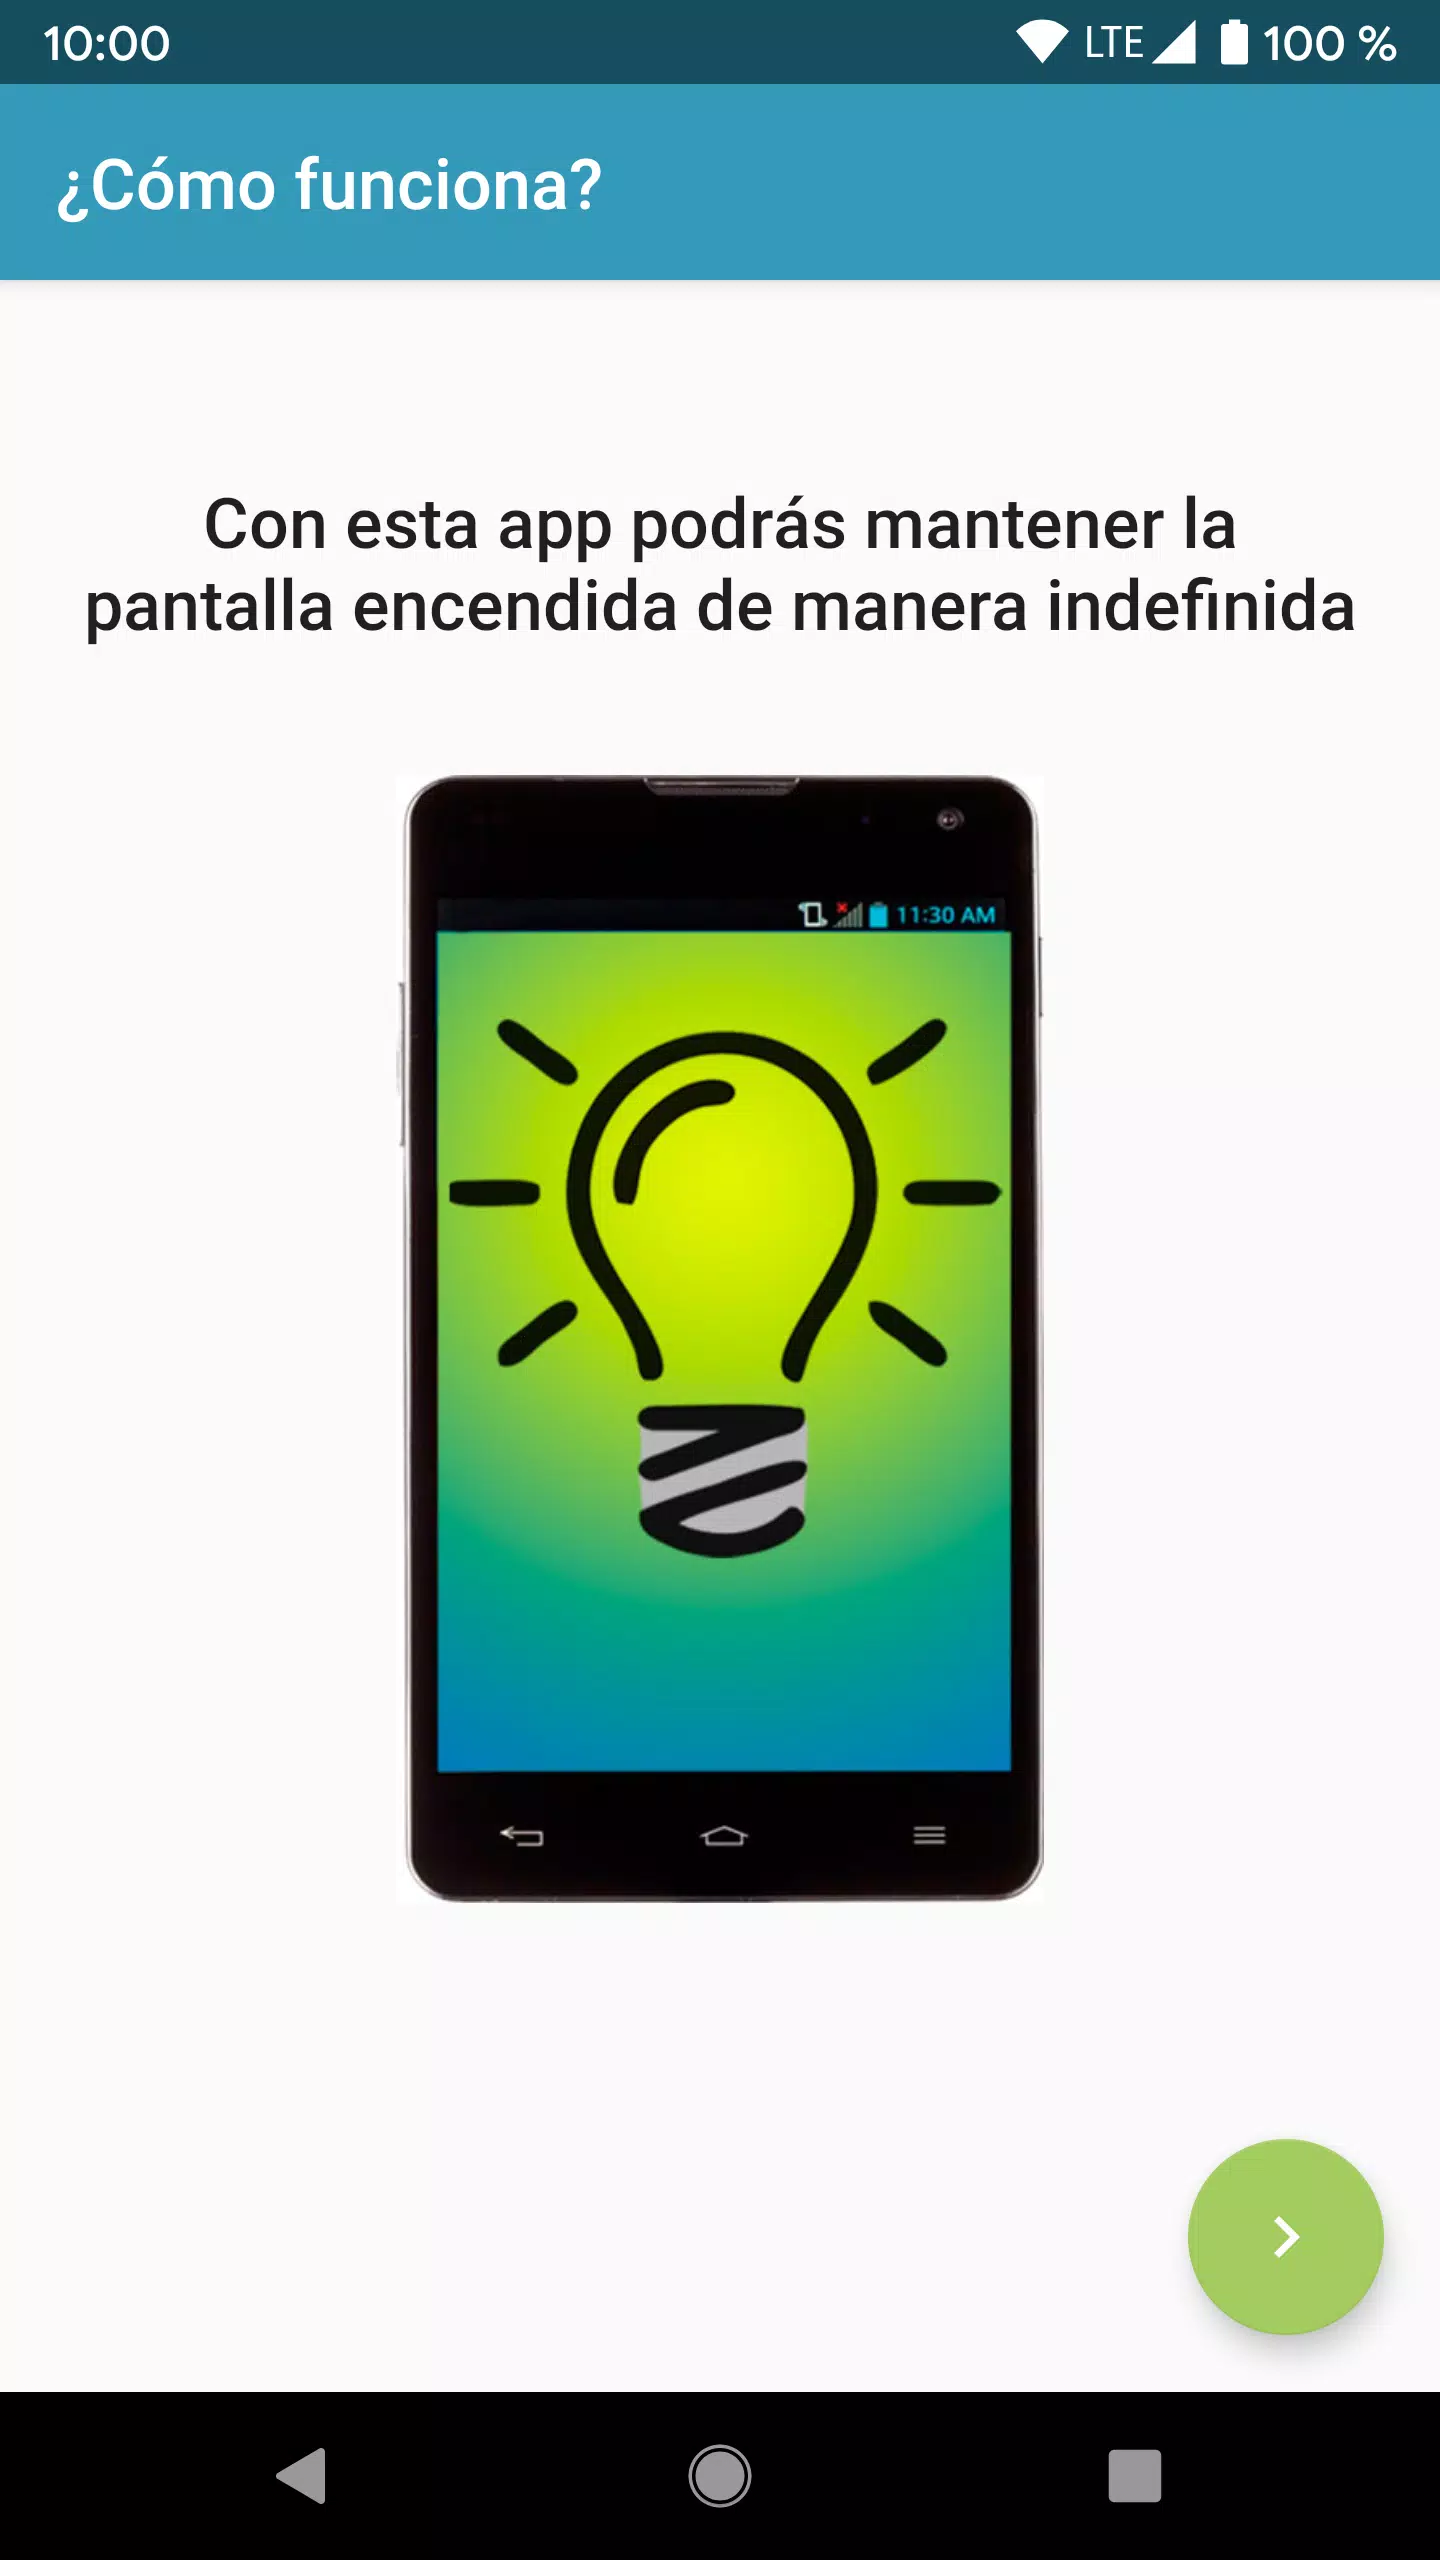 Mantener Pantalla Encendida for Android - APK Download